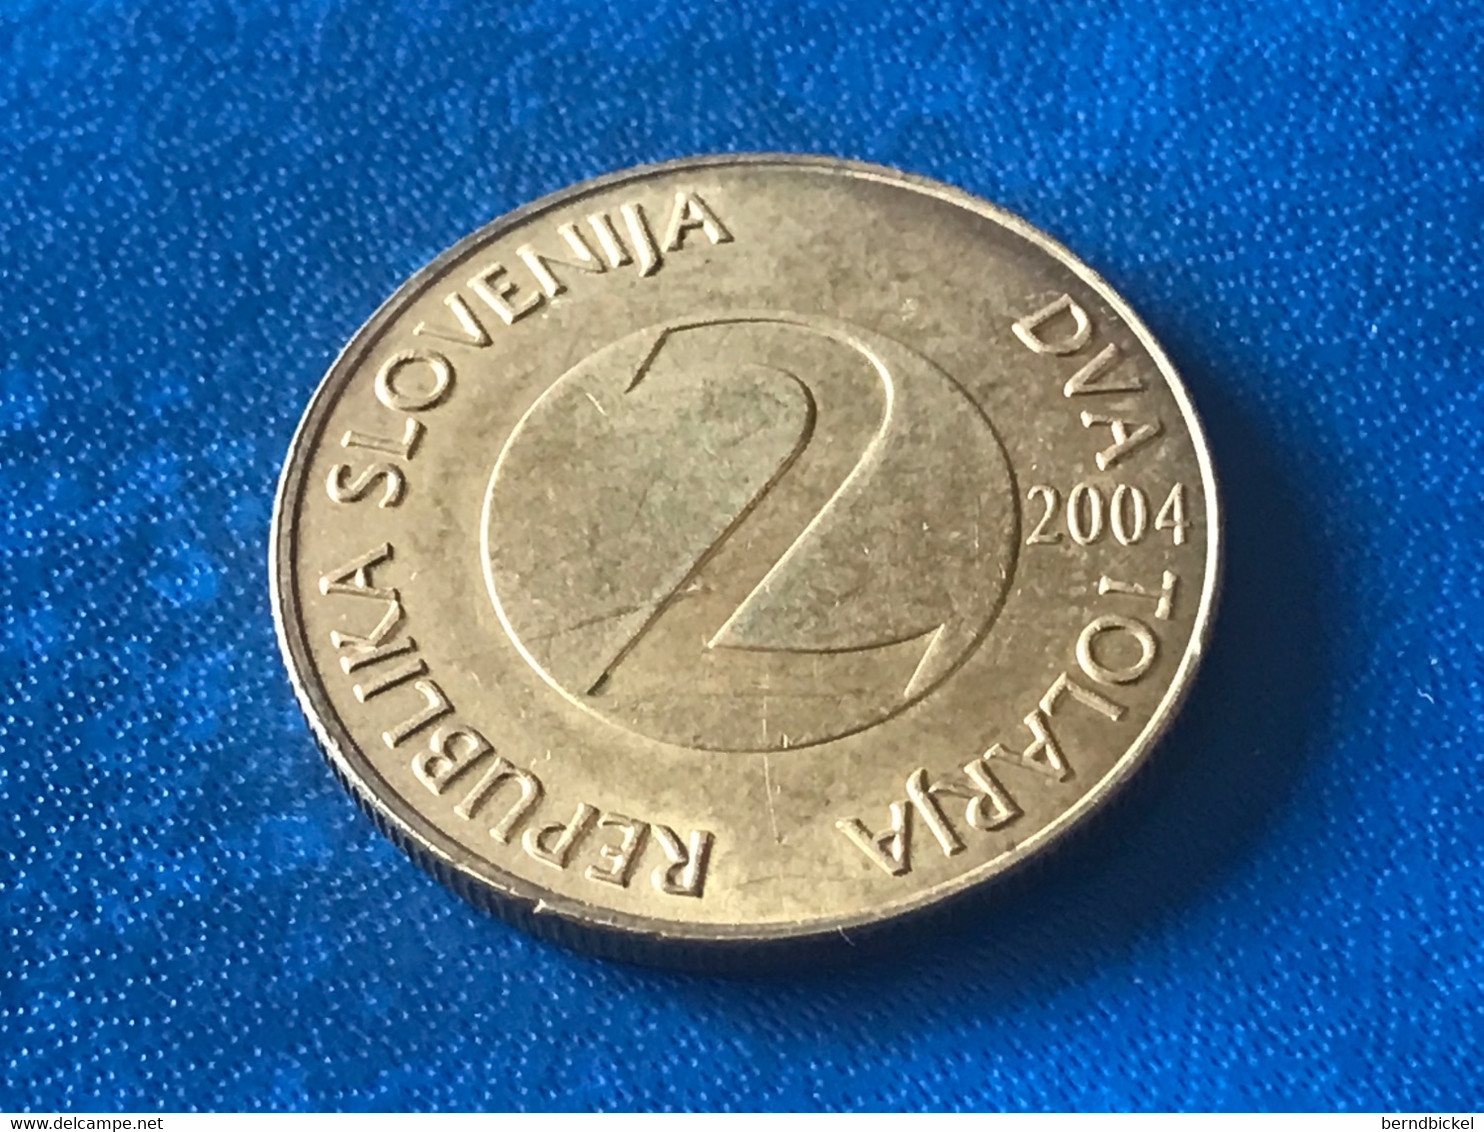 Münze Münzen Umlaufmünze Slowenien 2 Tolarja 2004 - Slovenia